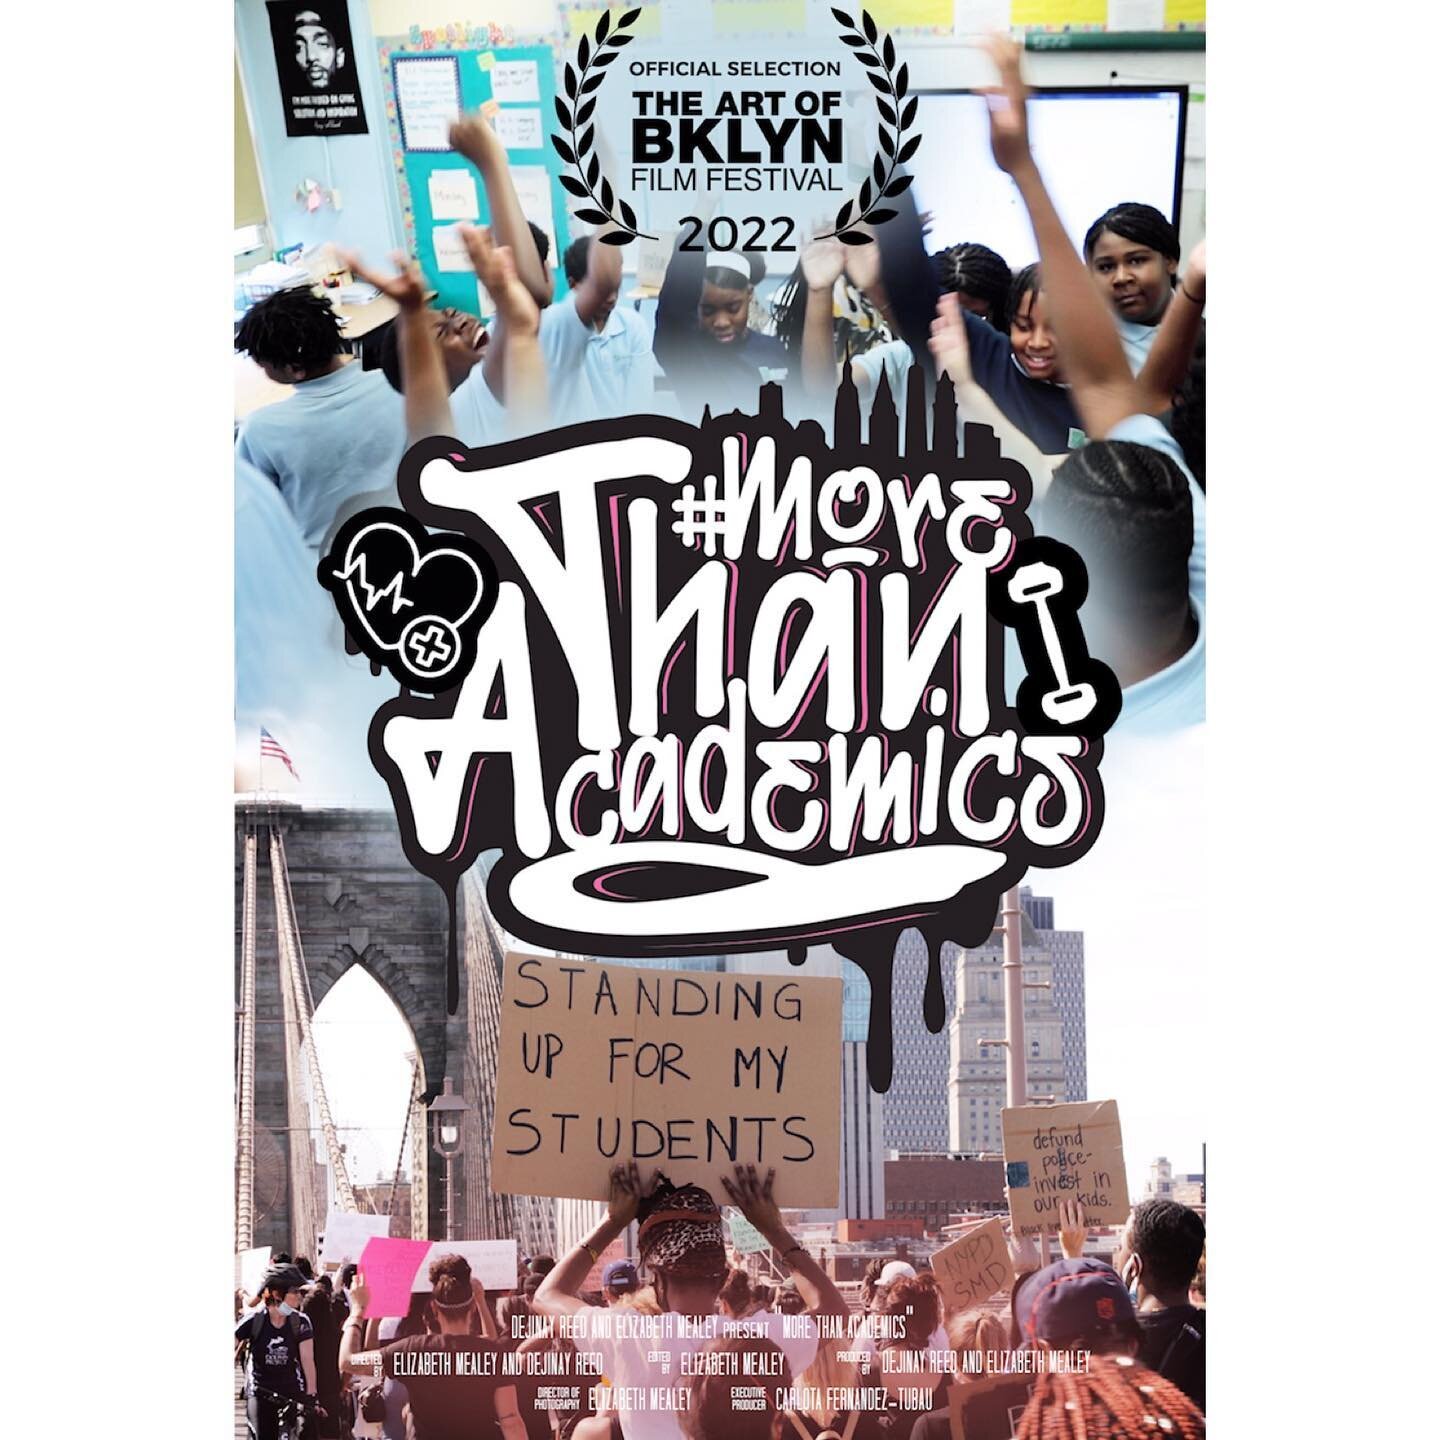 Another festival acceptance for @morethanacademicsdocumentary ! We will be screening @theartofbklyn film festival in June! ✨
.
.
.
.
.
.
.
.
.
.
.
.
#femalefilmmakerfriday #femalefilmmaker #womeninfilm #womendirectors #womenproducers #womencinematogr